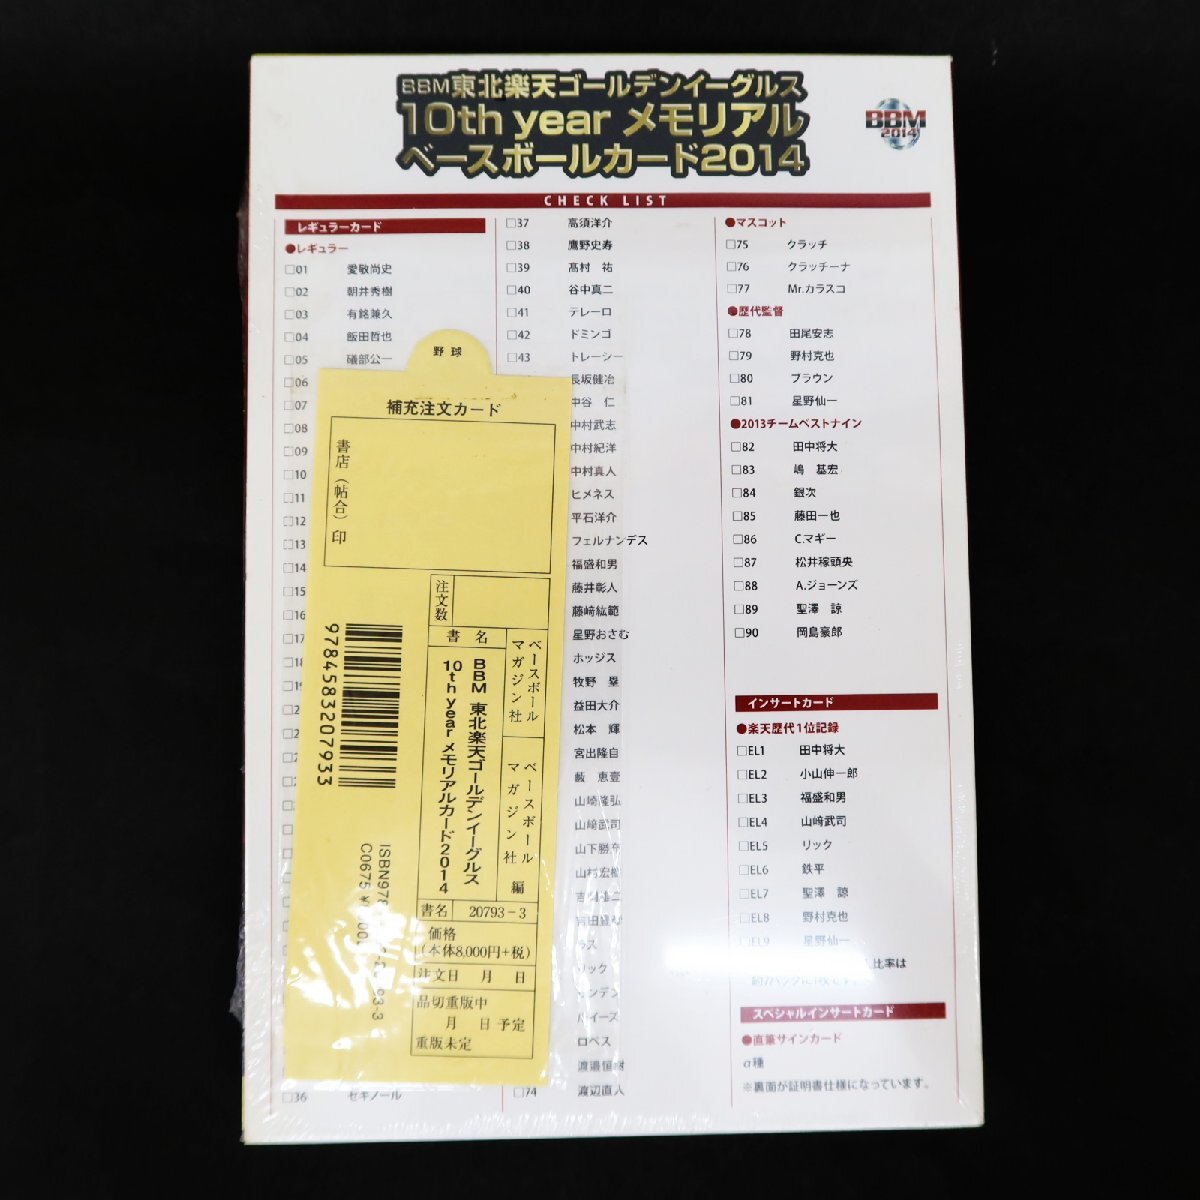 【ya0450】 BBM 東北楽天ゴールデンイーグルス 10th year メモリアルベースボールカード2014 野球 トレカ 未開封ボックスの画像2